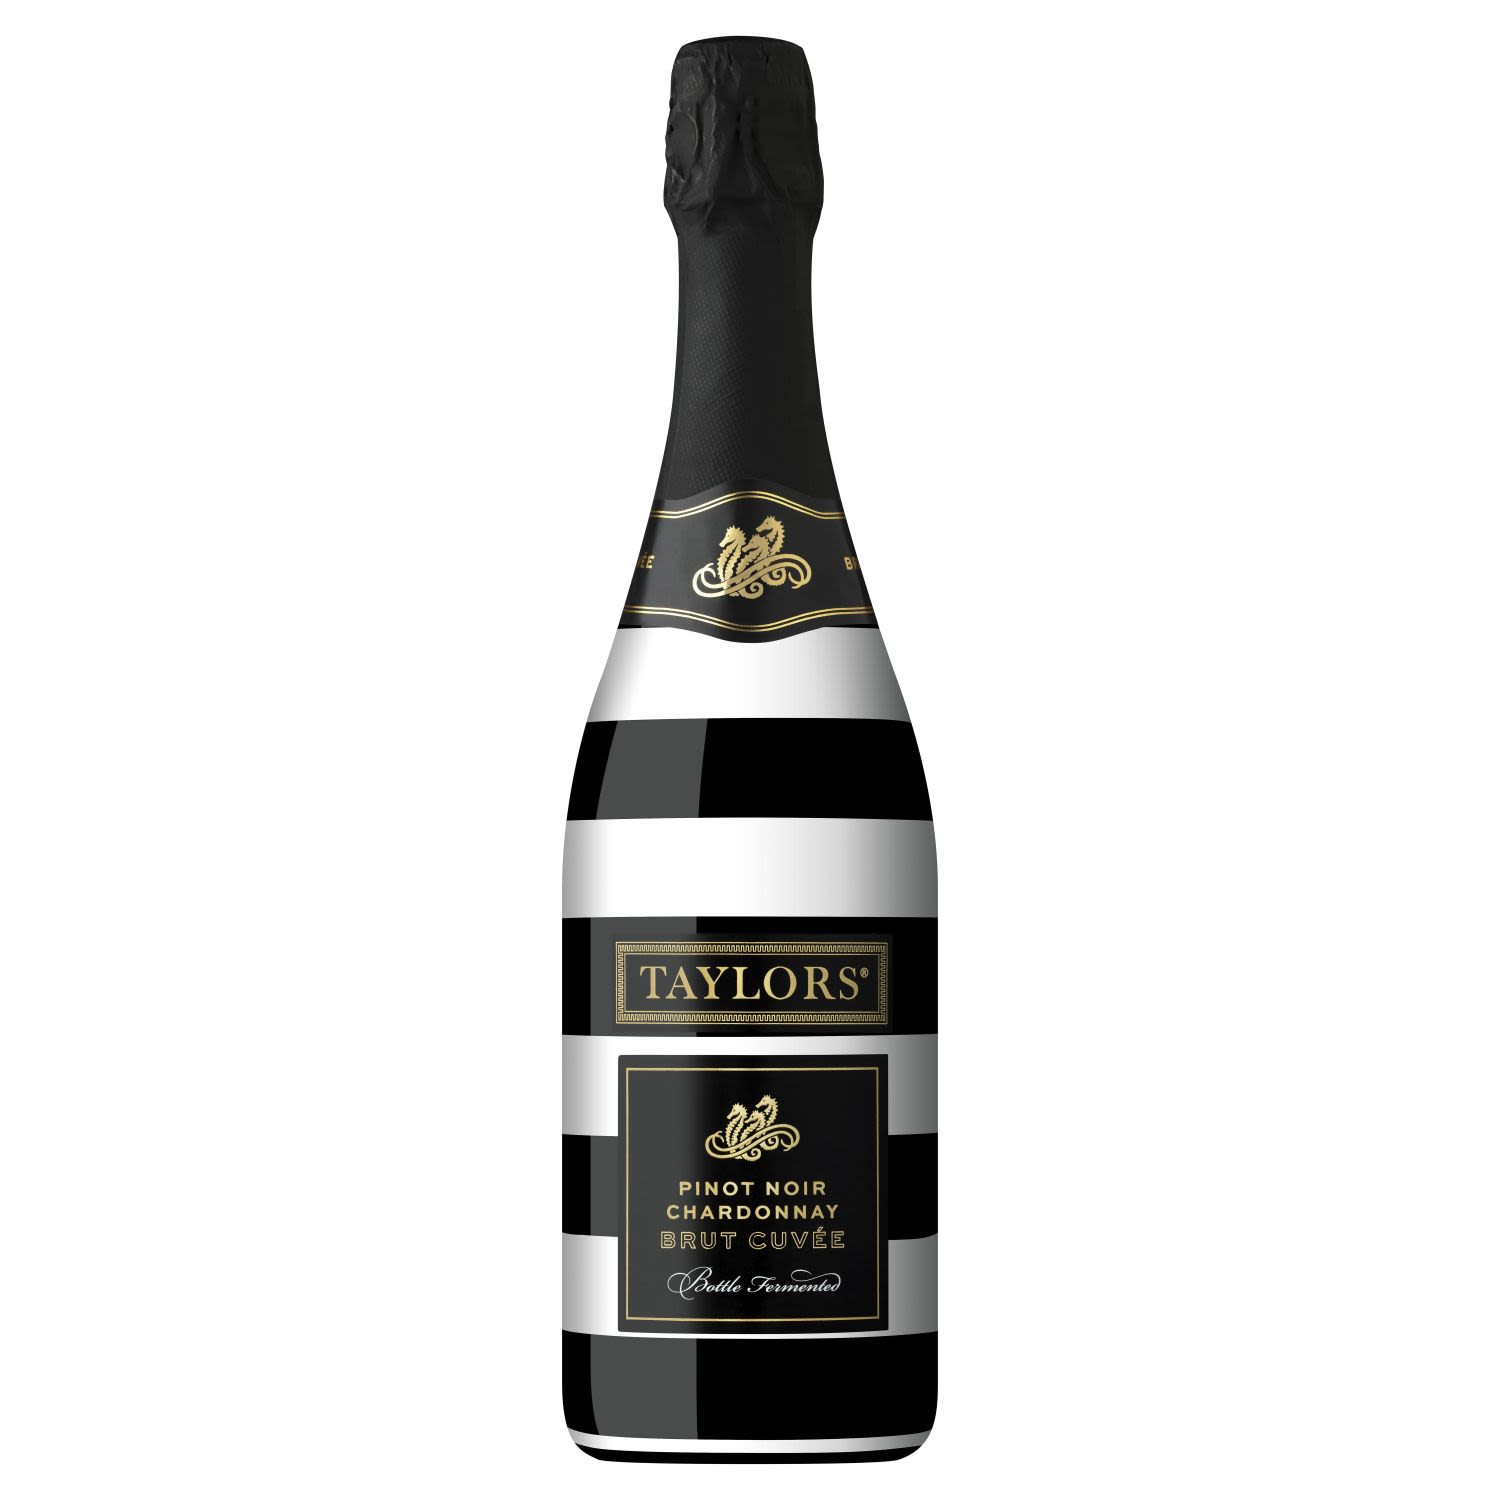 Taylors Estate Pinot Noir Chardonnay Brut Cuvee NV 750mL Bottle